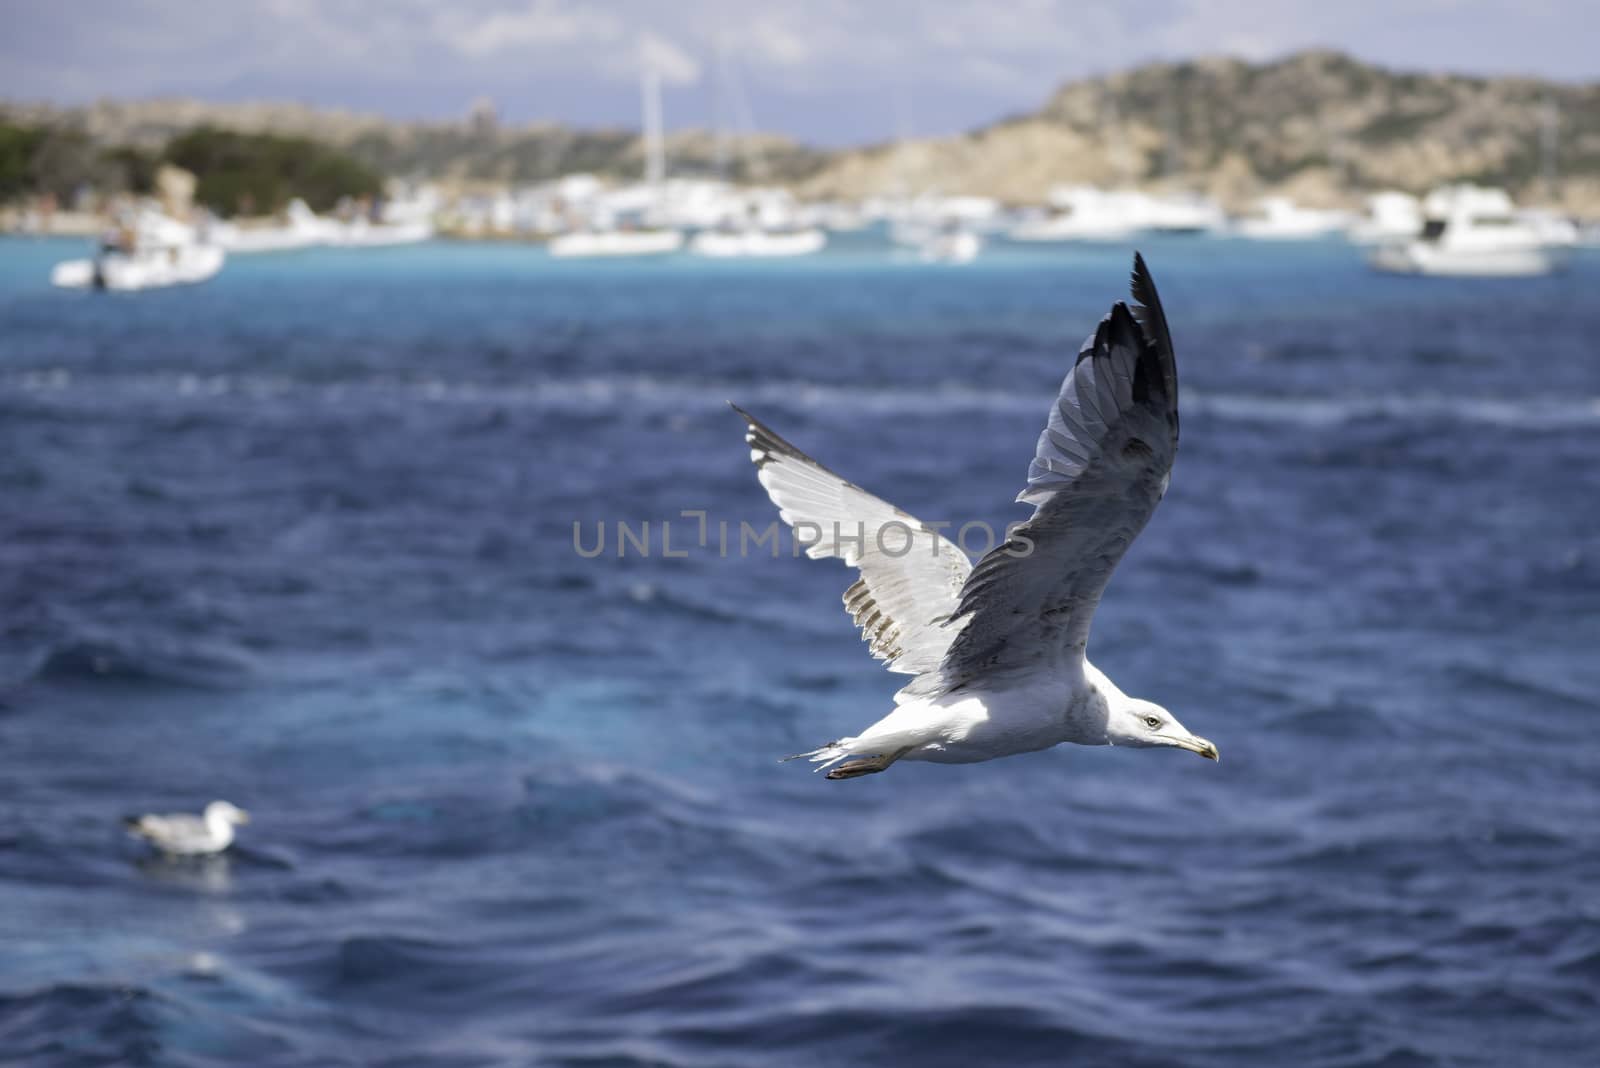 Closeup of a seagull flying over the sea near the island of Budelli in the Maddalena Archipelago, Sardinia, Italy